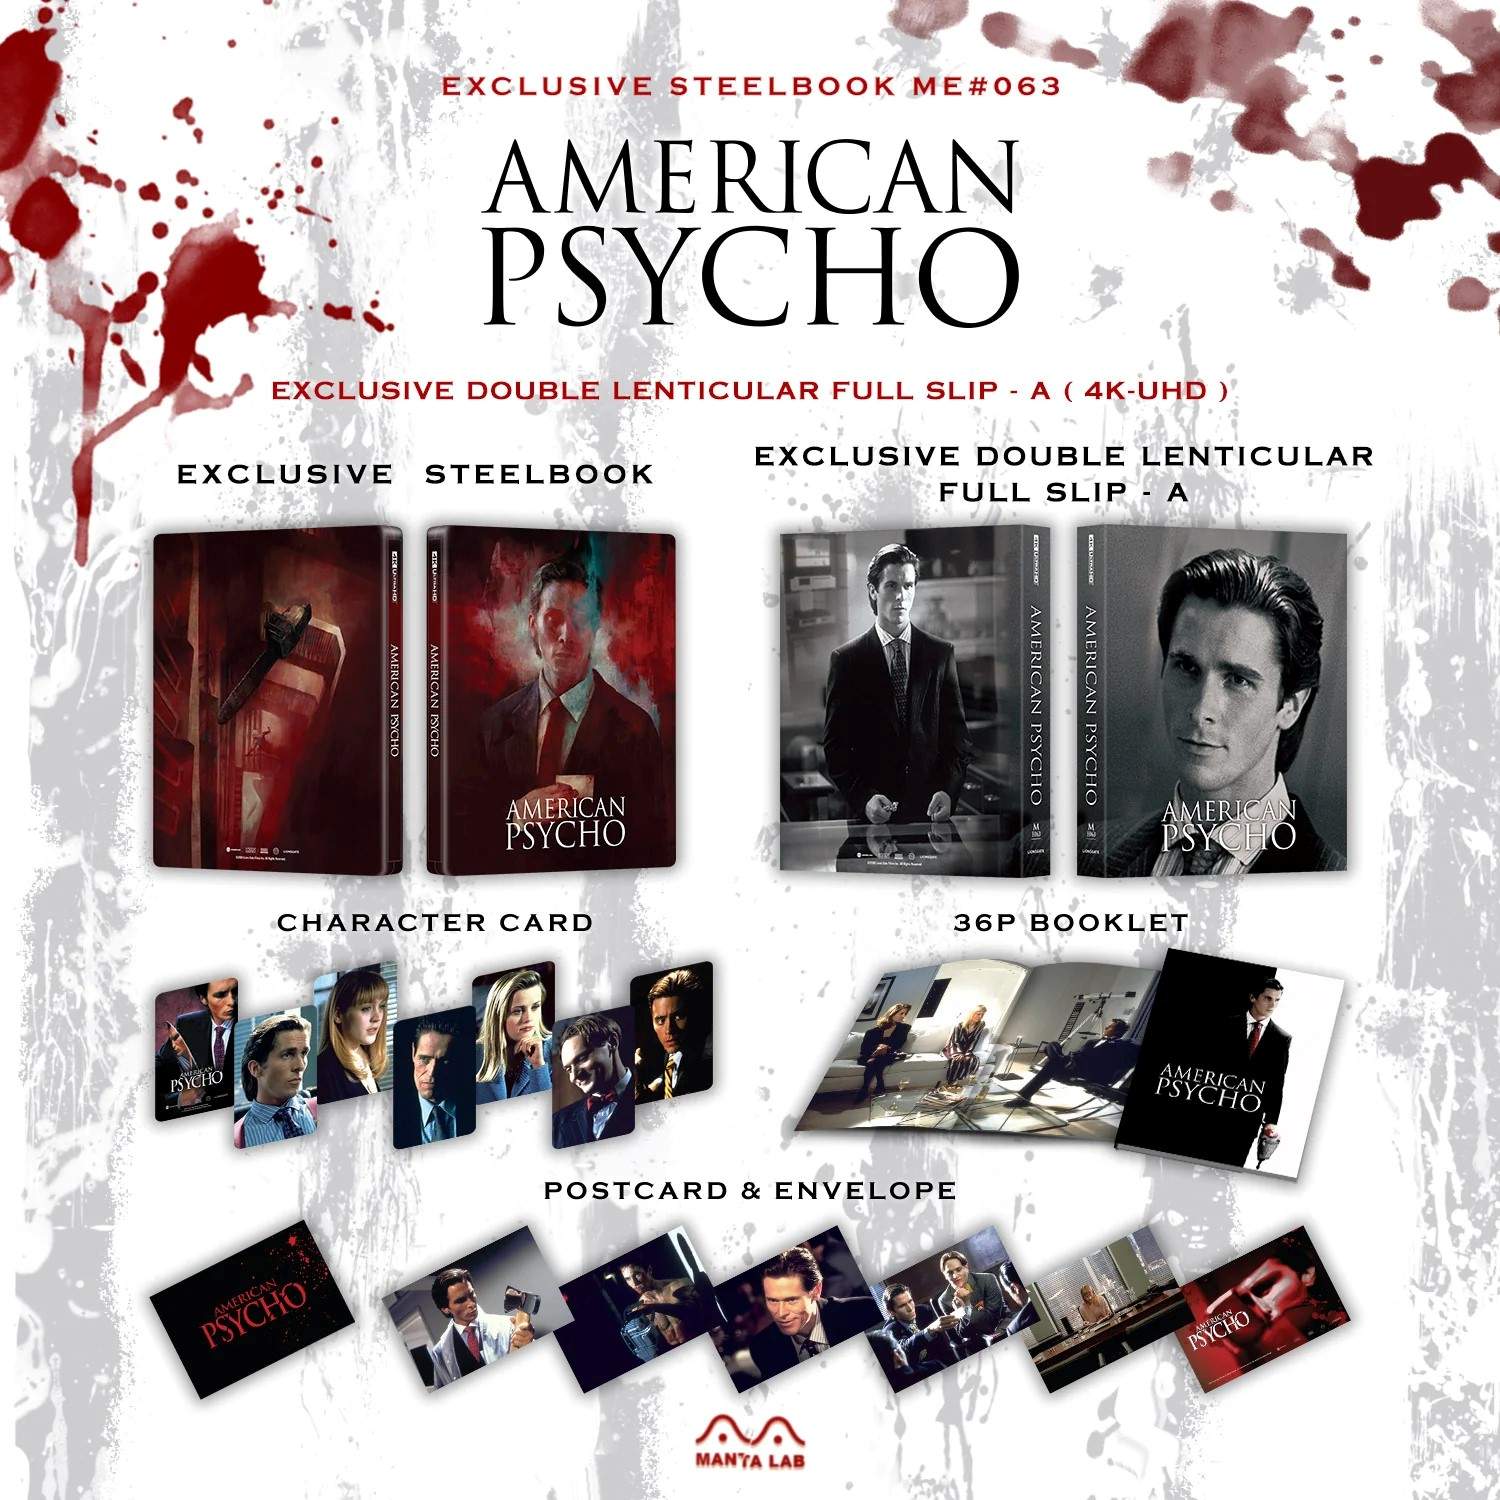 American Psycho Lenticular SteelBook Contents